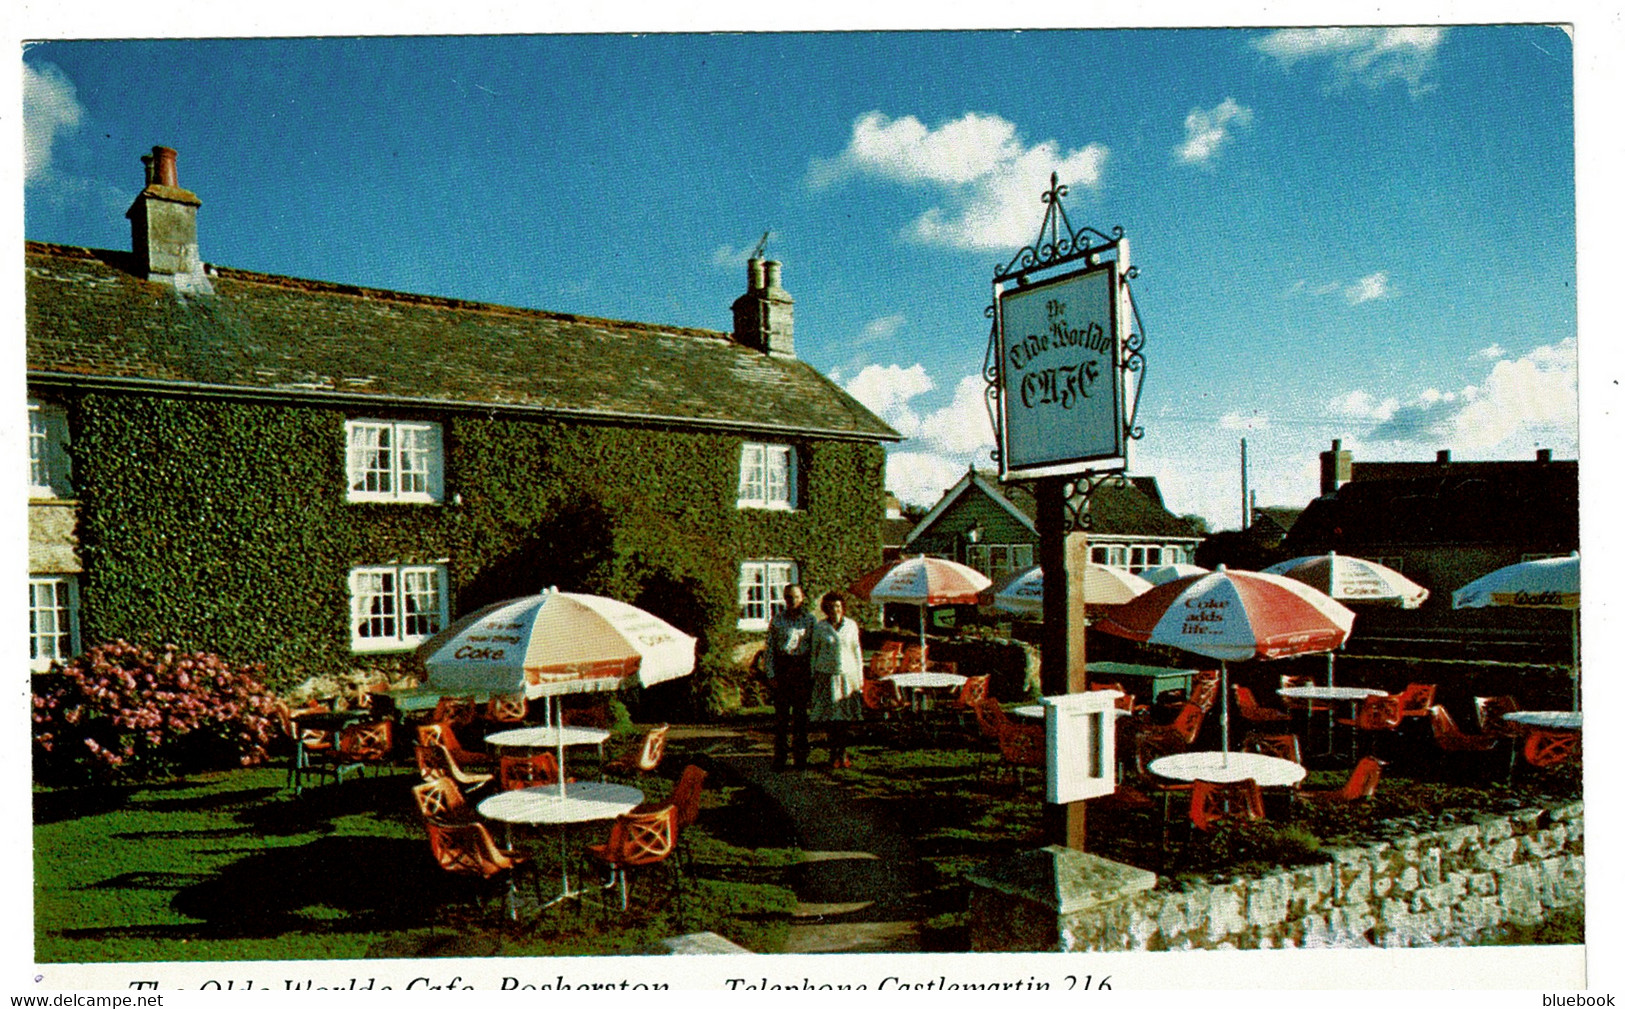 Ref 1460 - Postcard - Ye Olde World Cafe - Bosherston Pembrokeshire Wales - Pembrokeshire